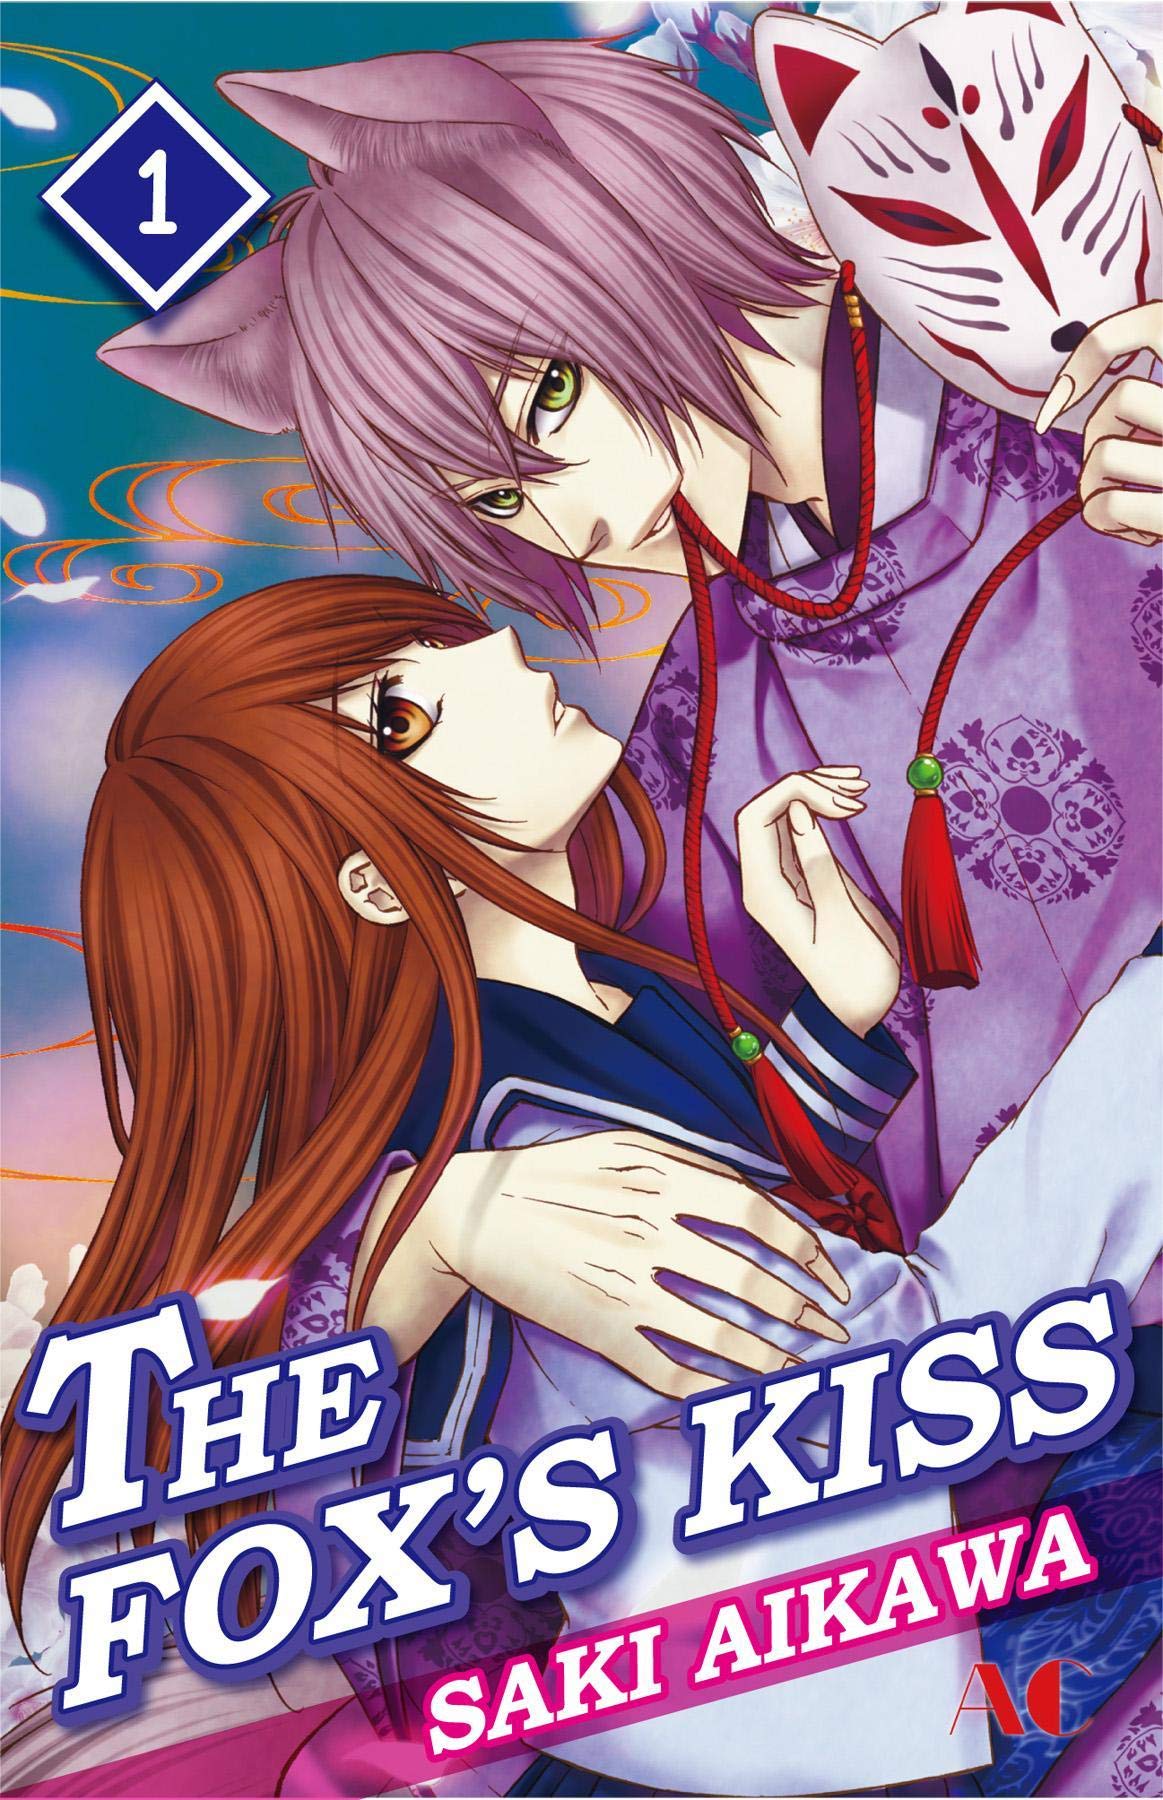 THE FOX'S KISS Vol. 1